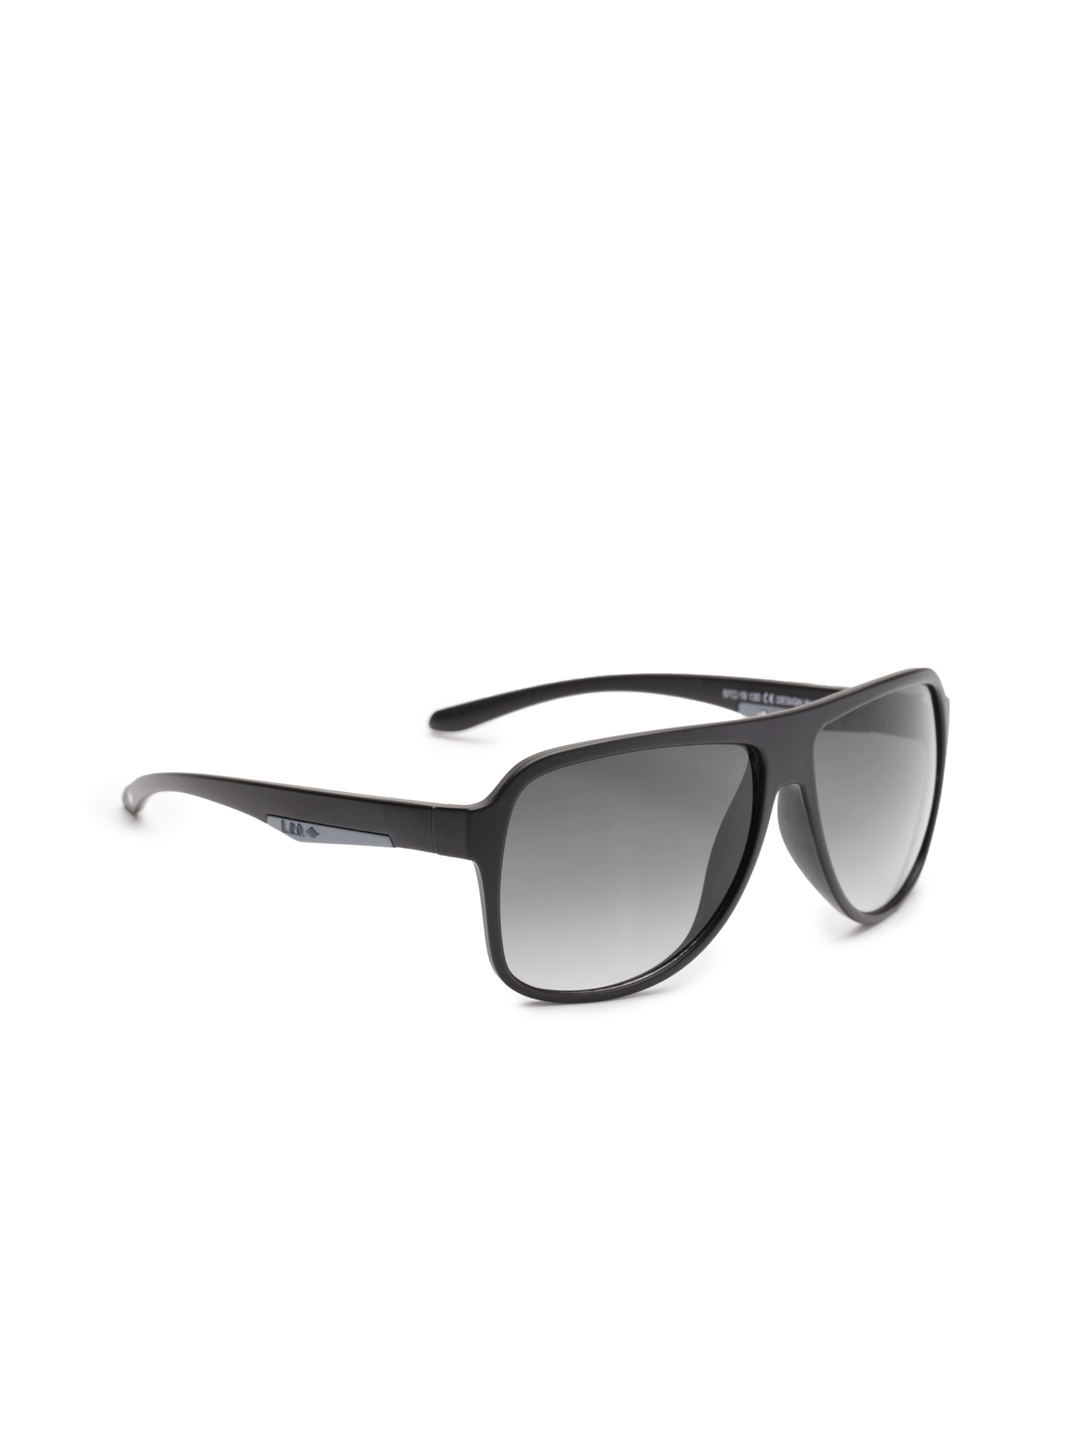 Buy Lee Cooper Men Sunglasses LC9060 FOB - Sunglasses for ...